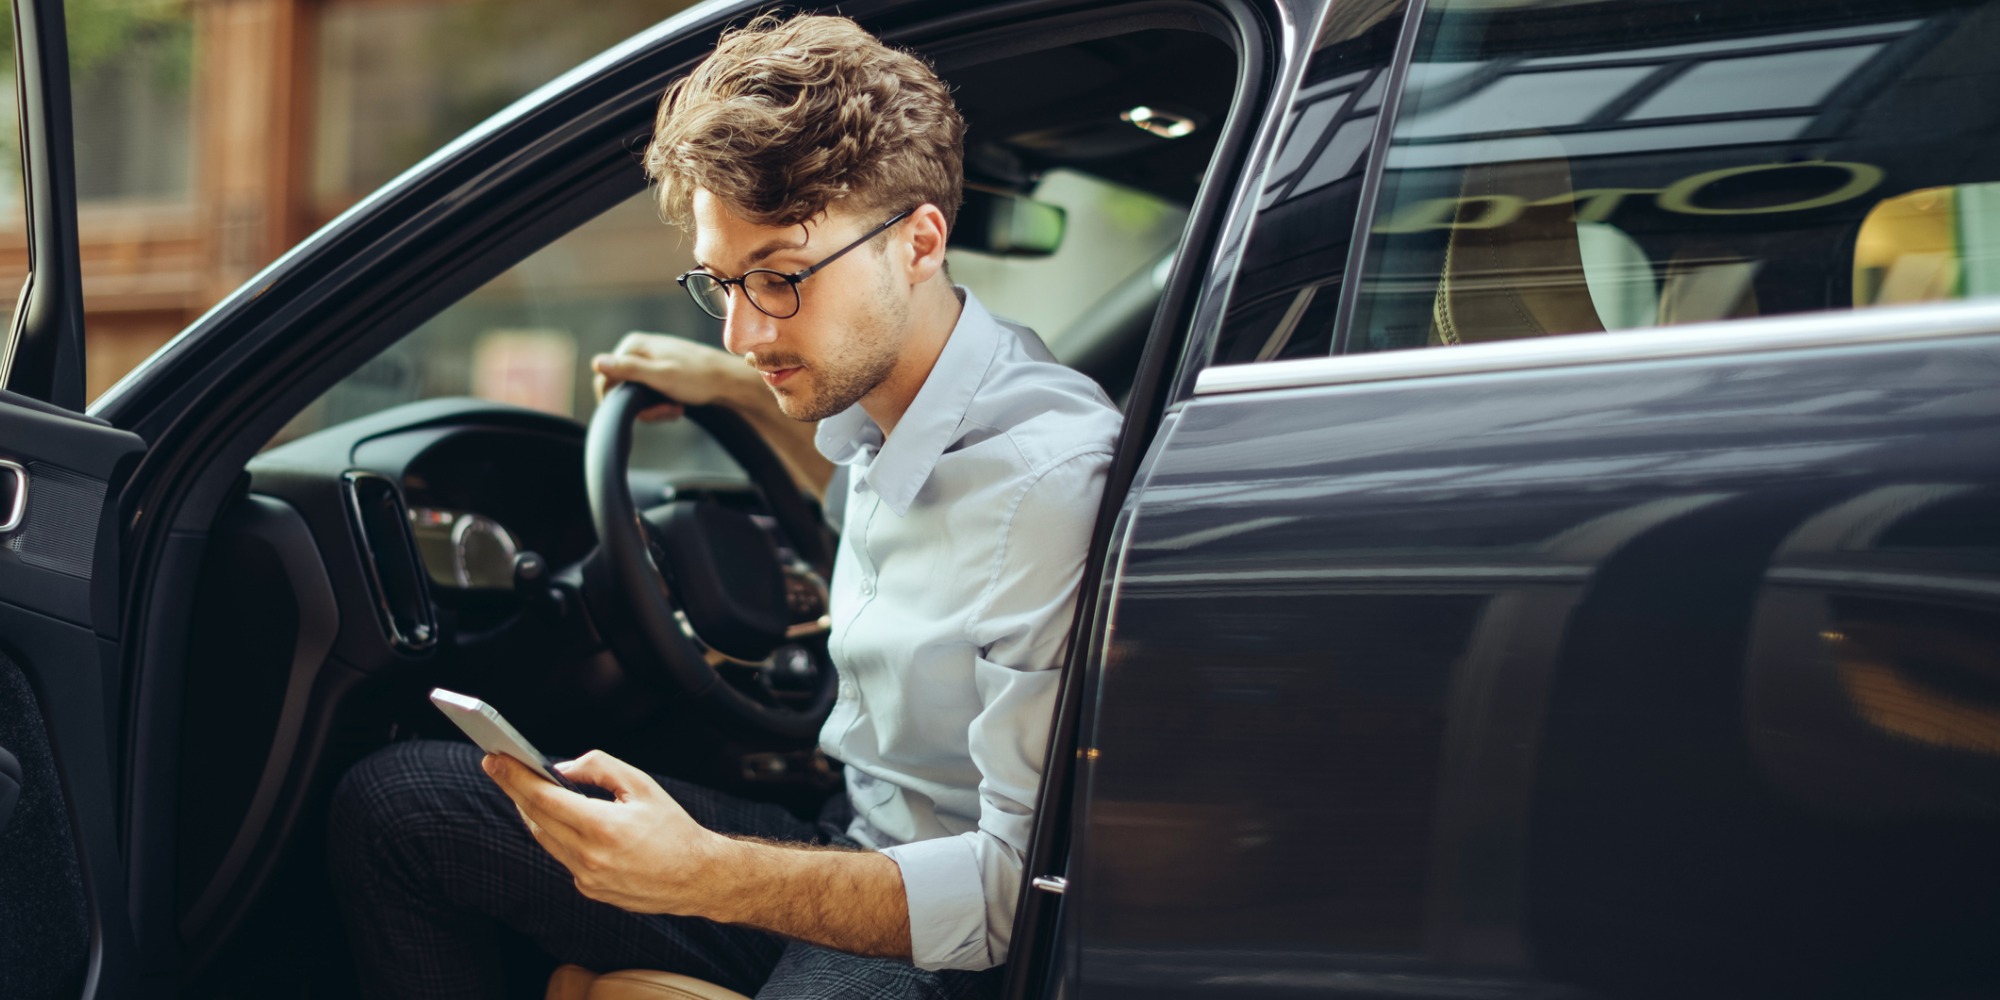 Man checks smartphone before driving his car